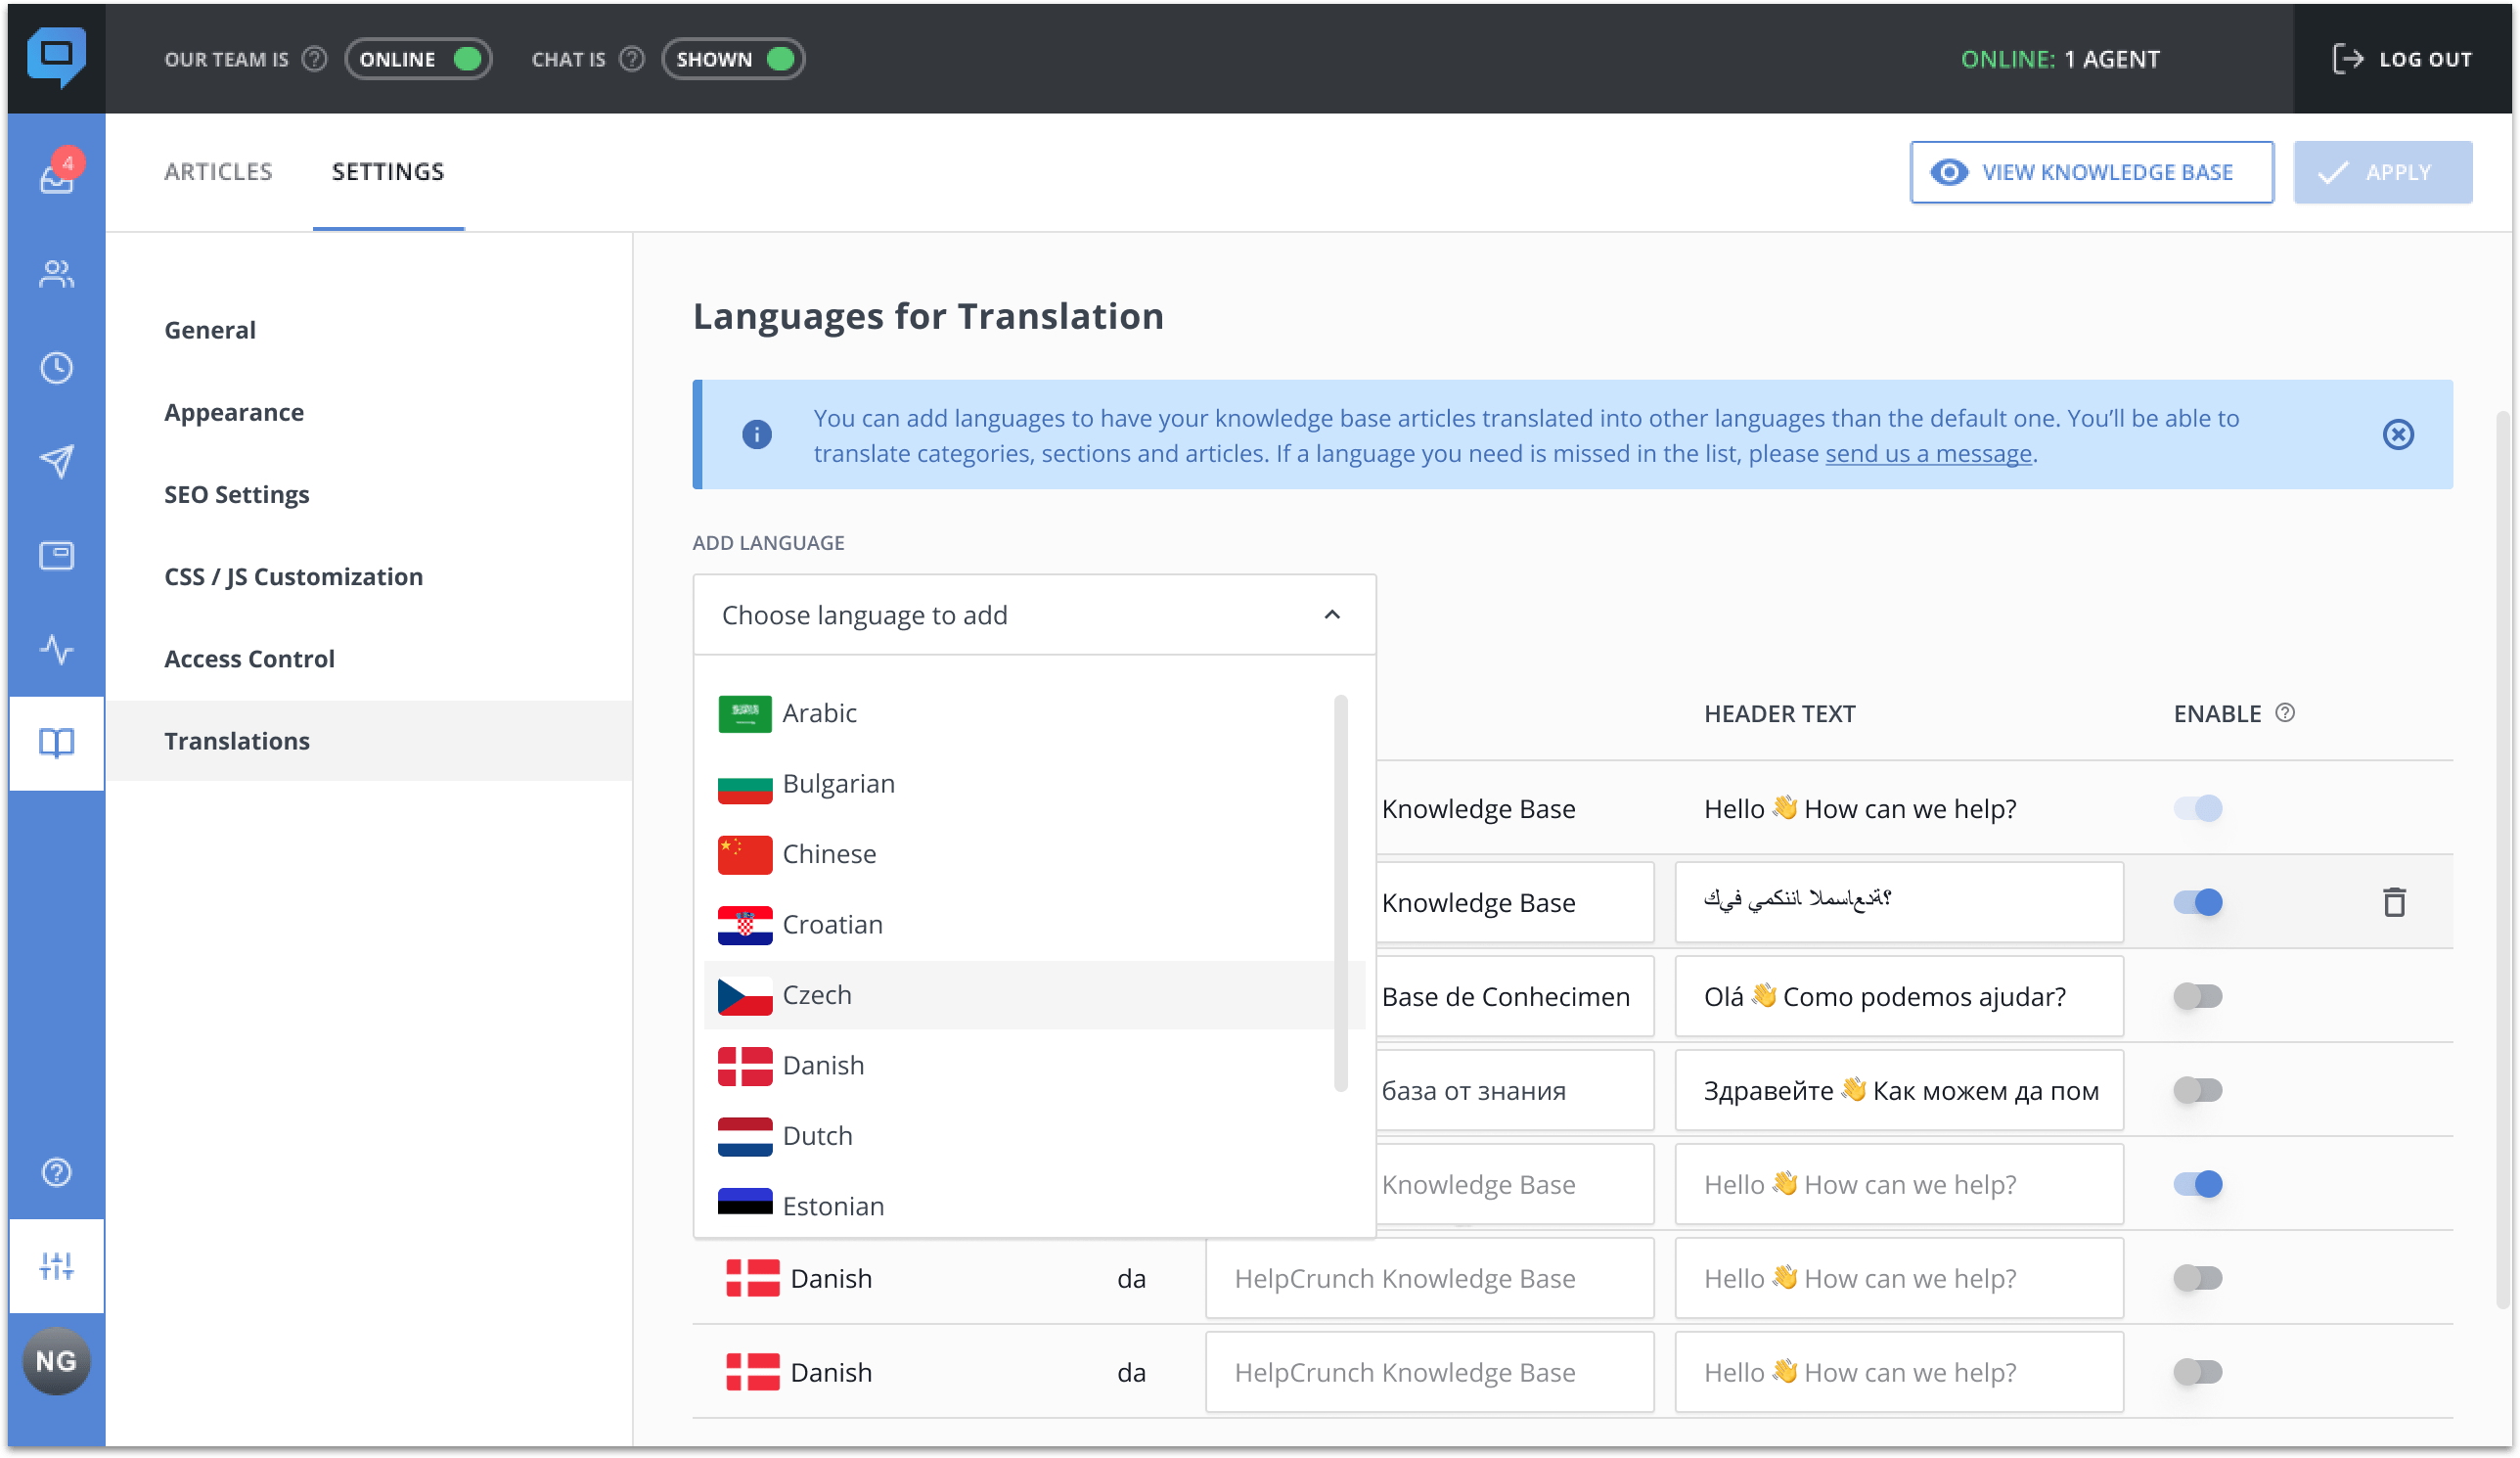 Multilingual knowledge base settings